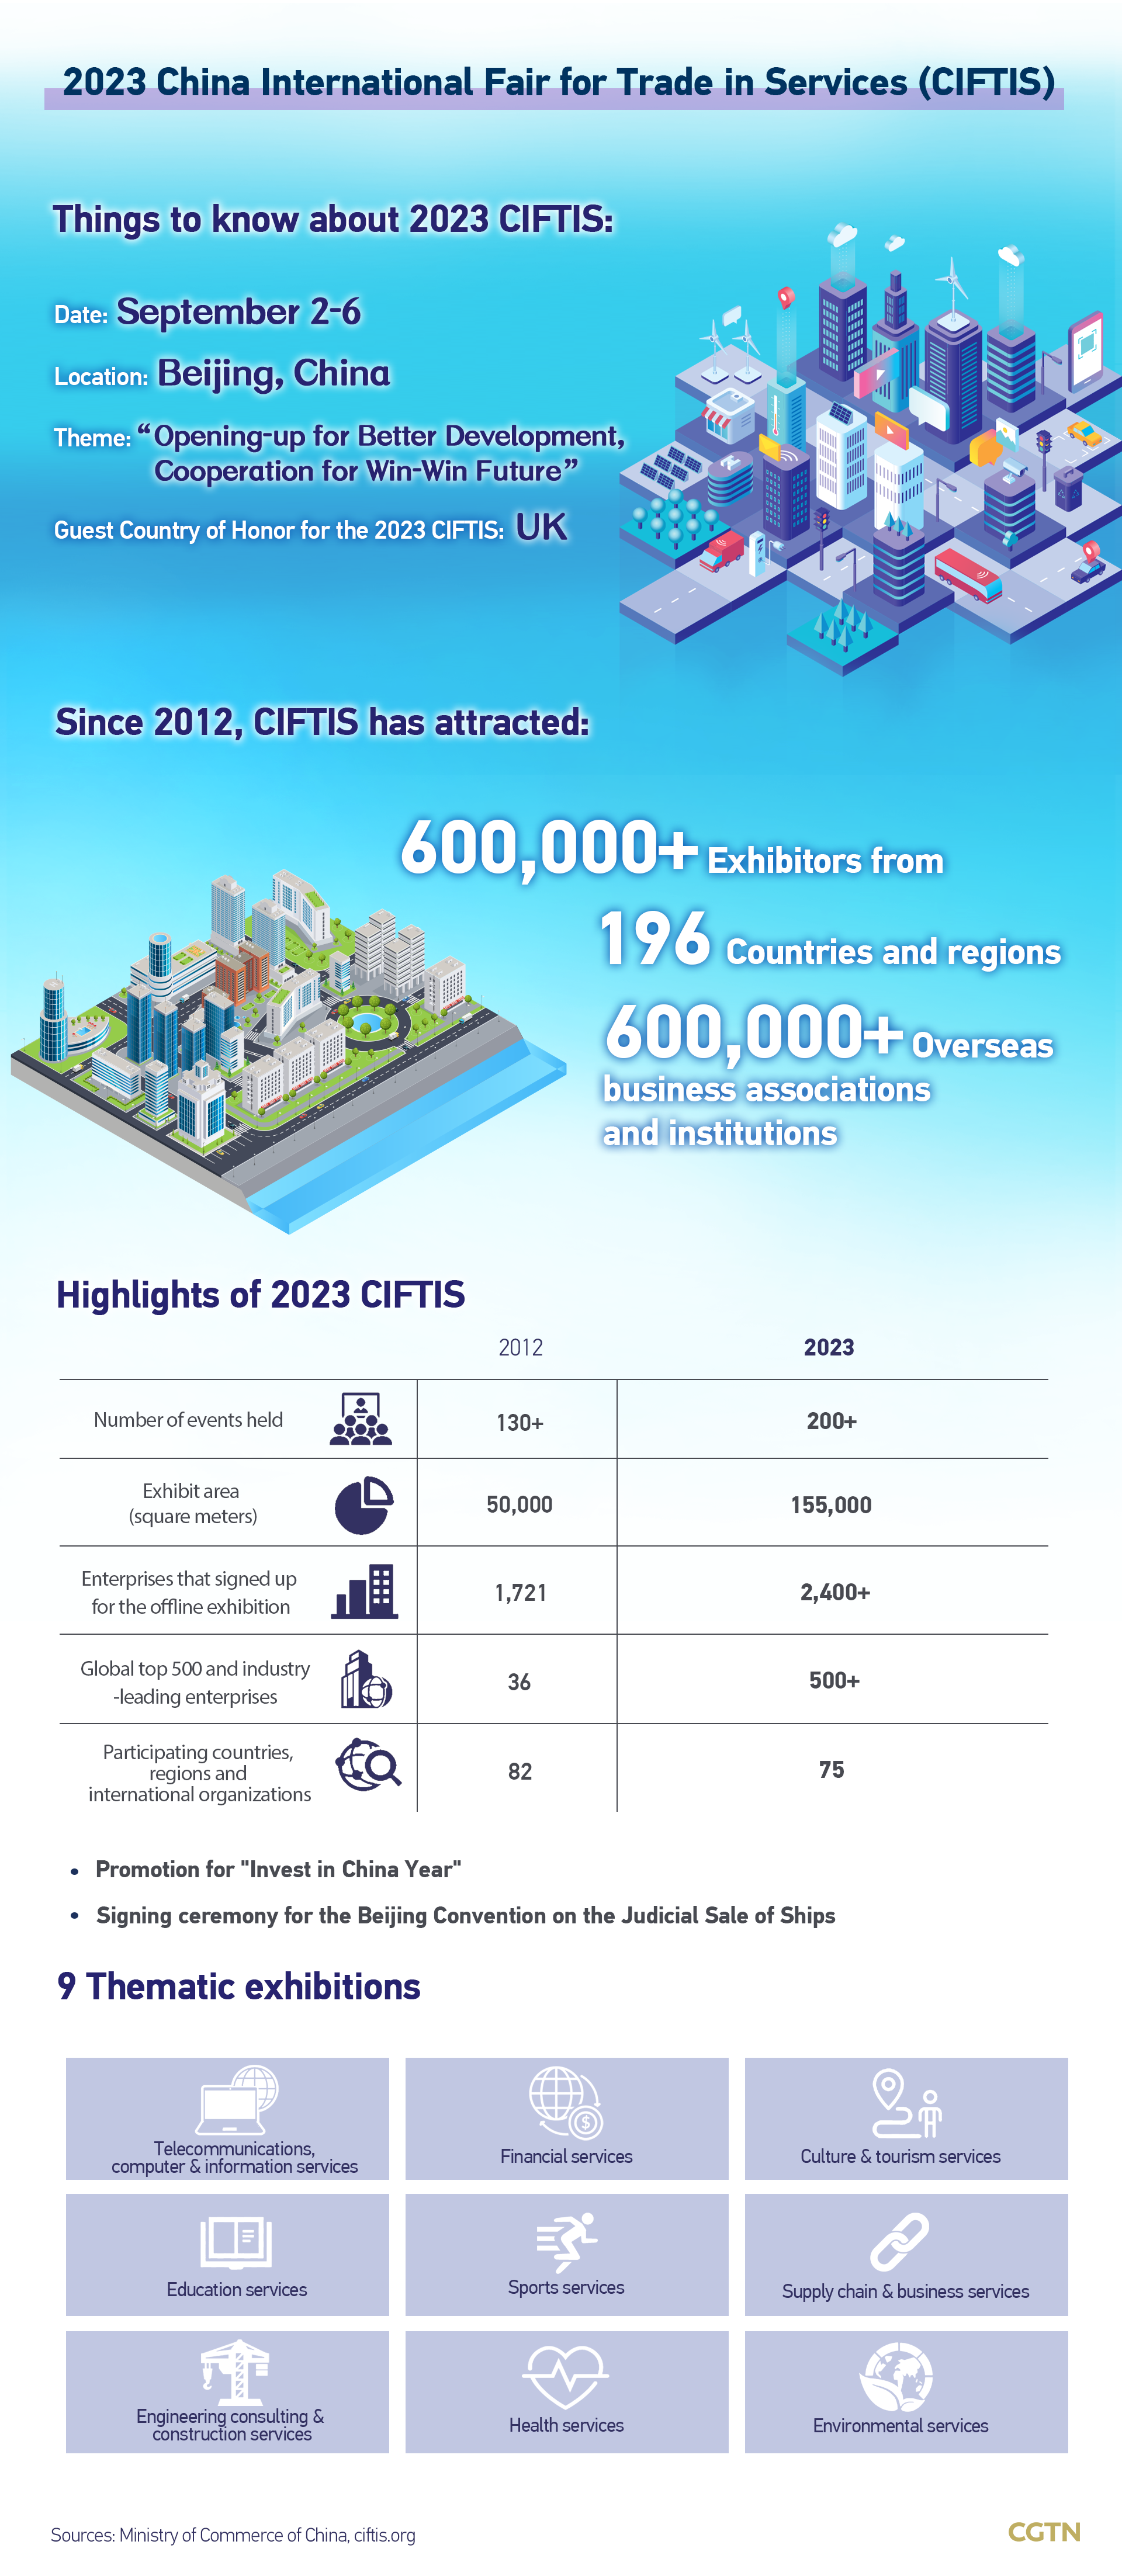 Graphics: Highlights of 2023 CIFTIS